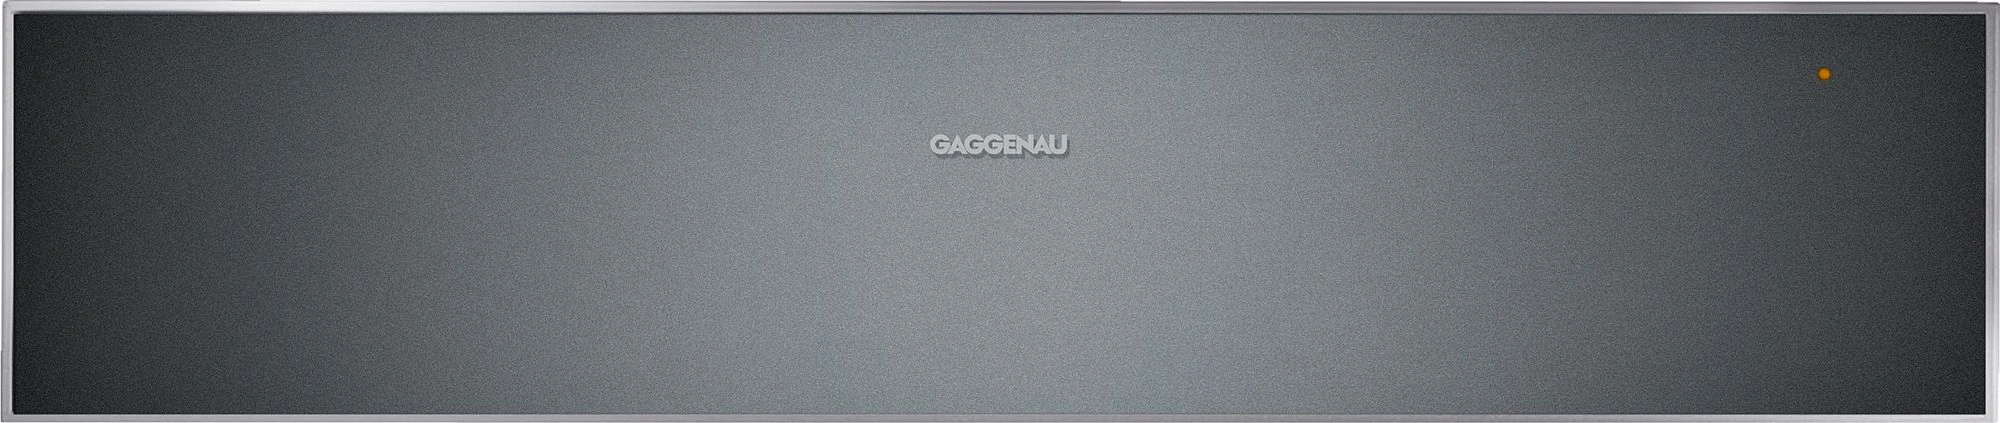 Gaggenau WS461100 Einbau-Wärmeschublade Anthrazit